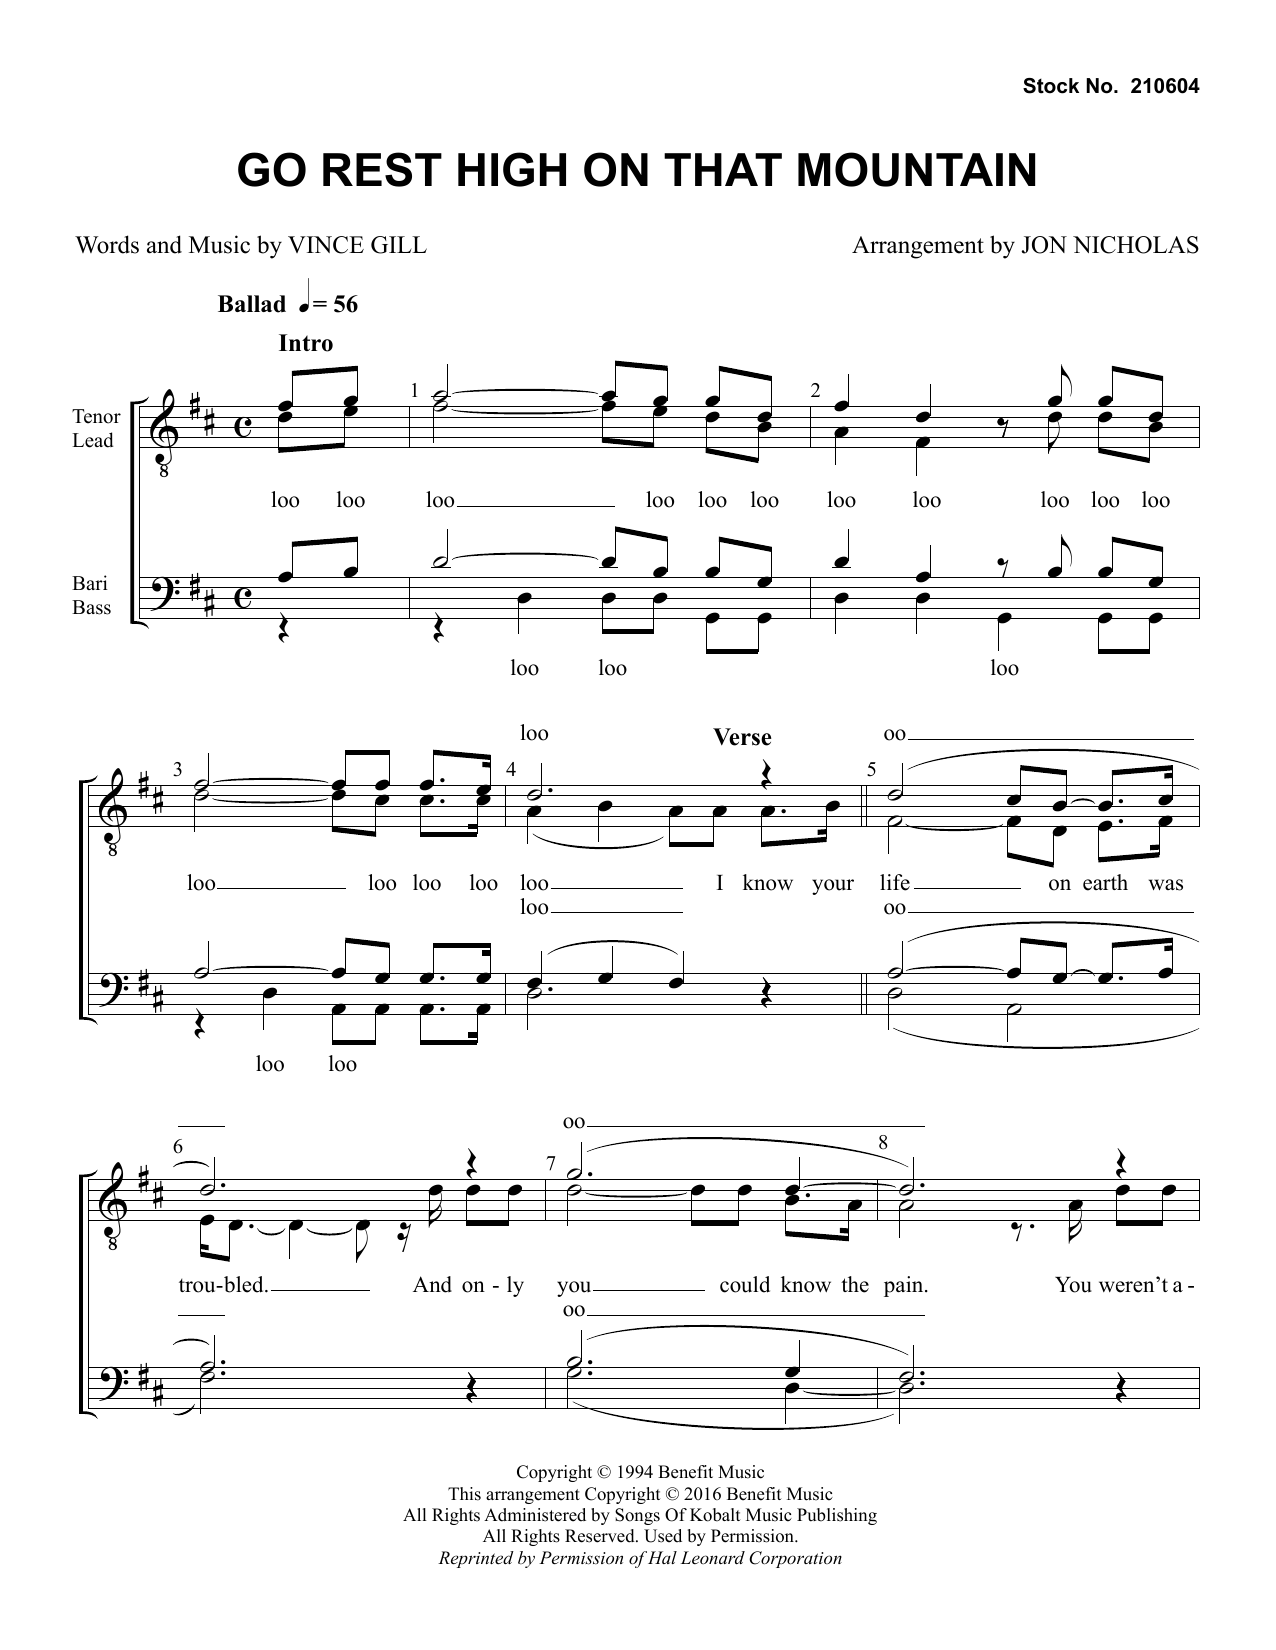 Vince Gill Go Rest High on That Mountain (arr. Jon Nicholas) Sheet Music Notes & Chords for TTBB Choir - Download or Print PDF